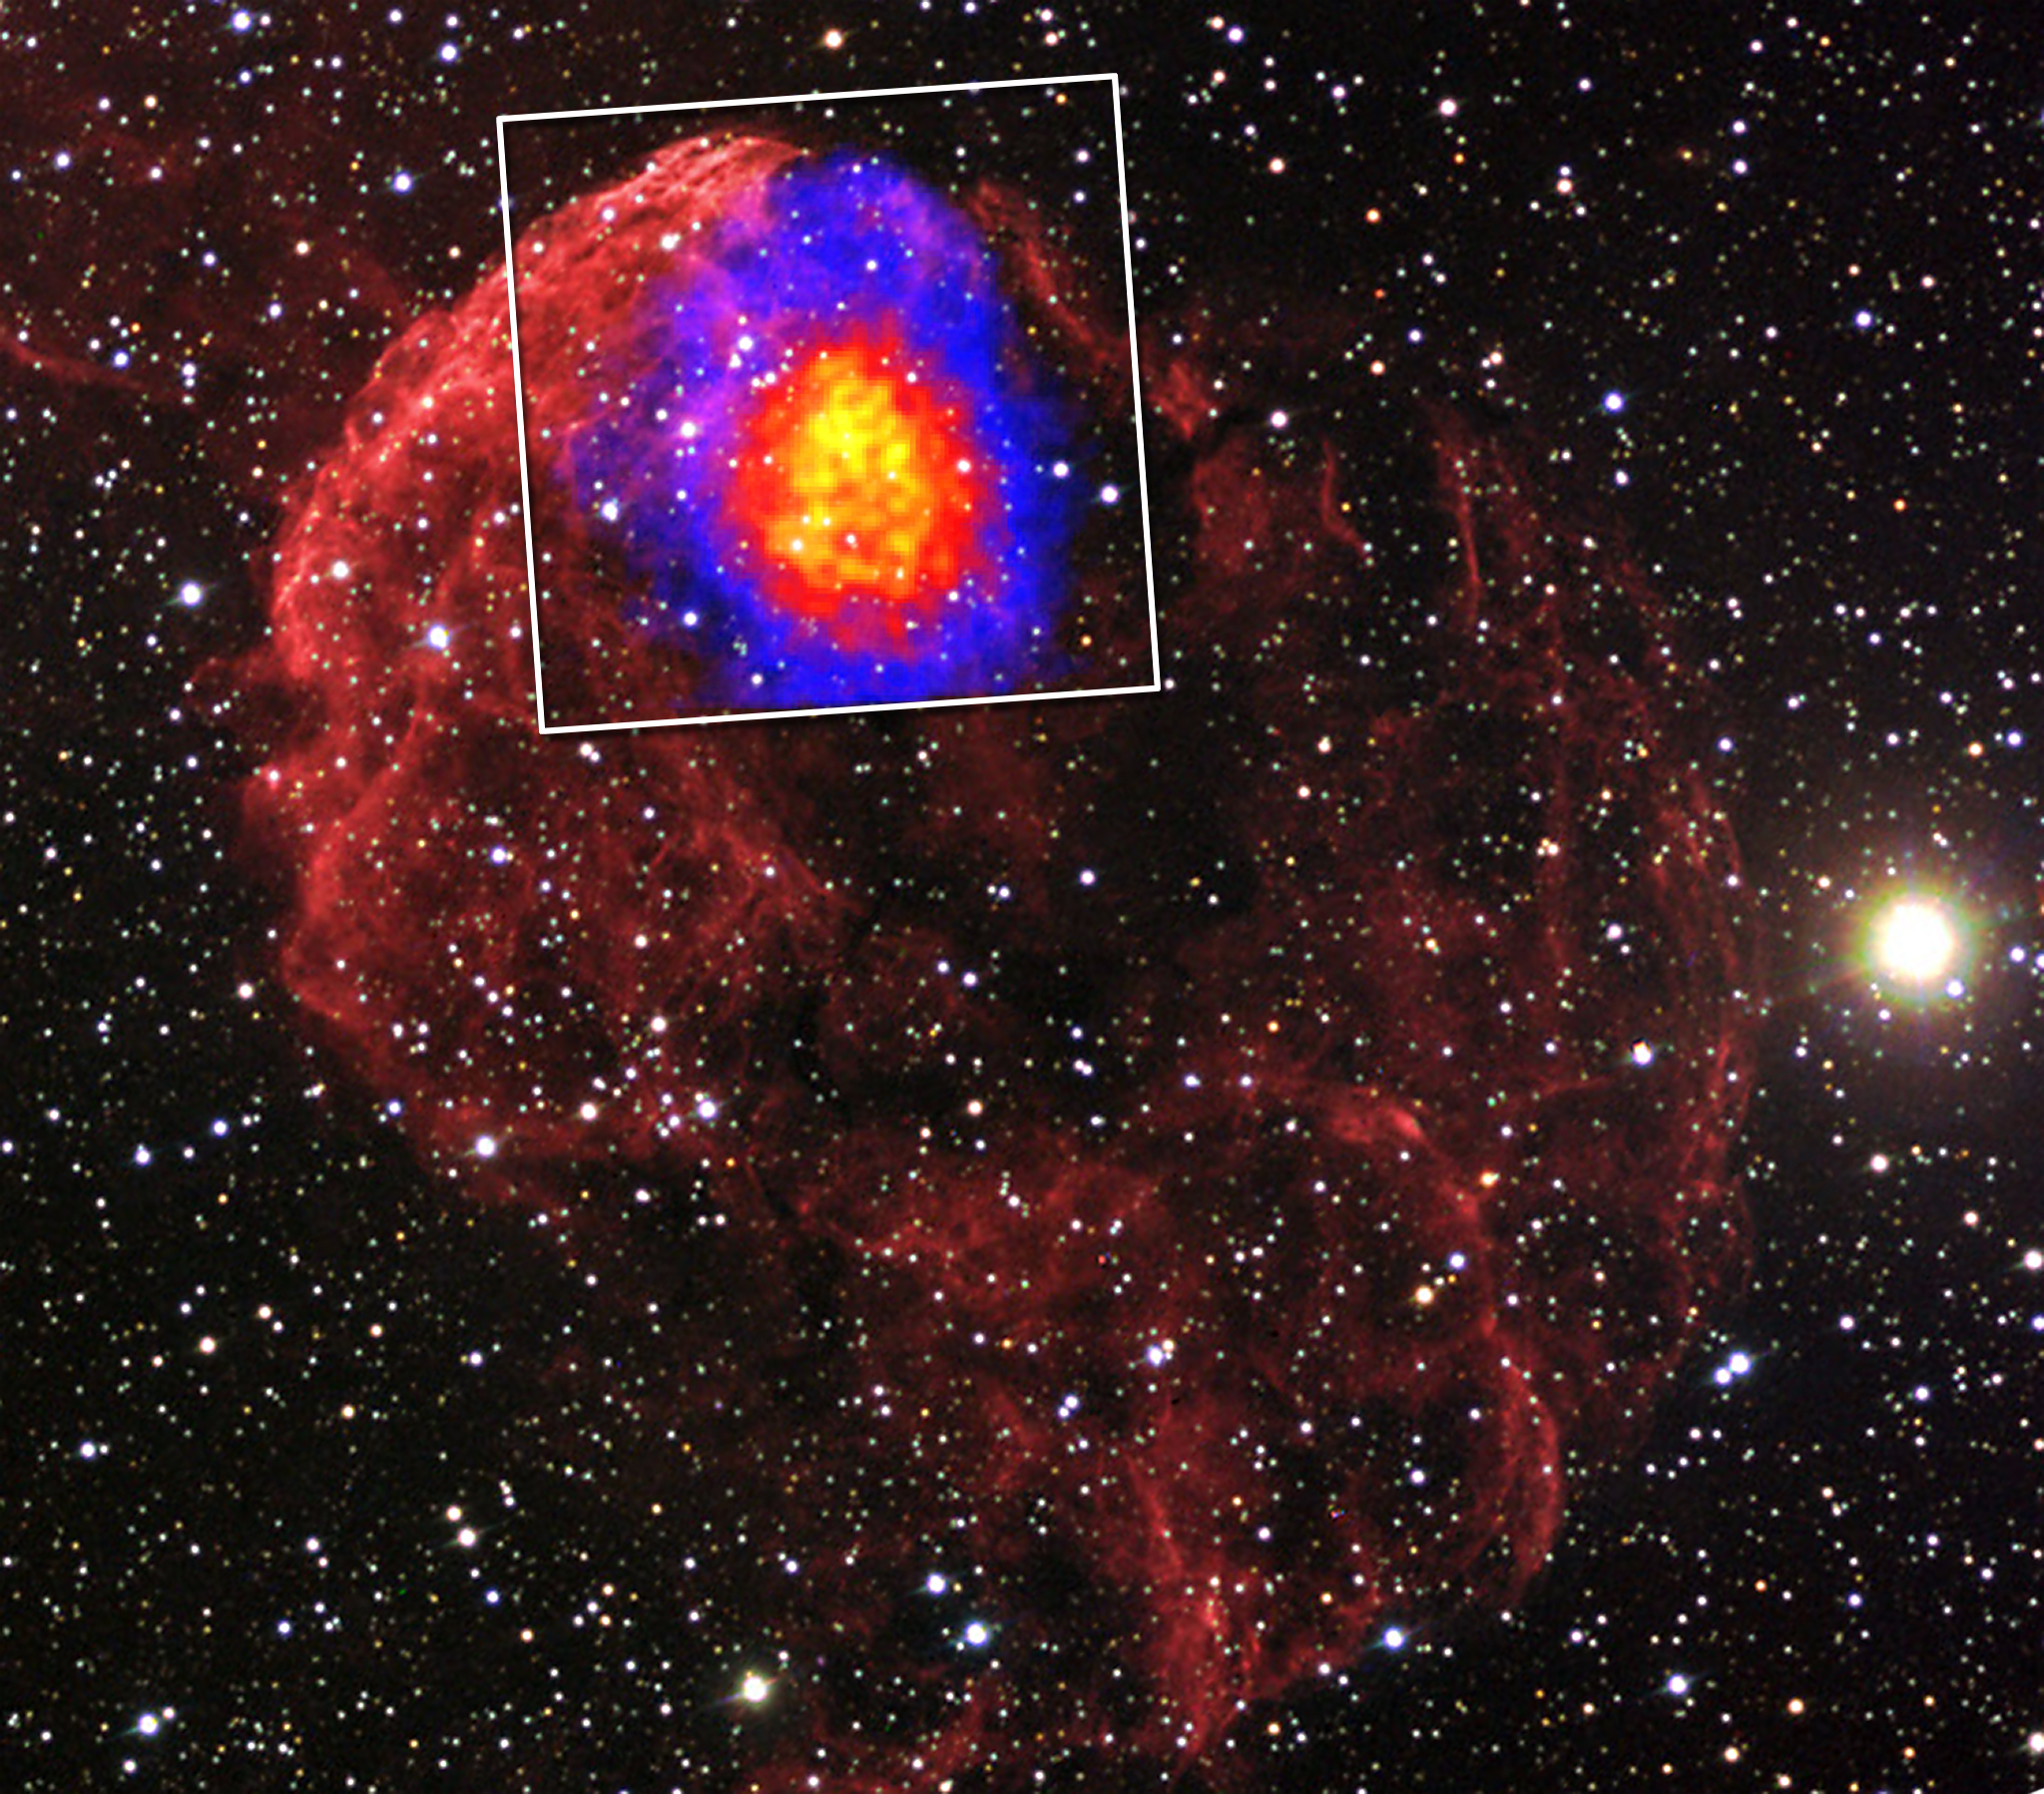 supernova remnant known as the Jellyfish Nebula